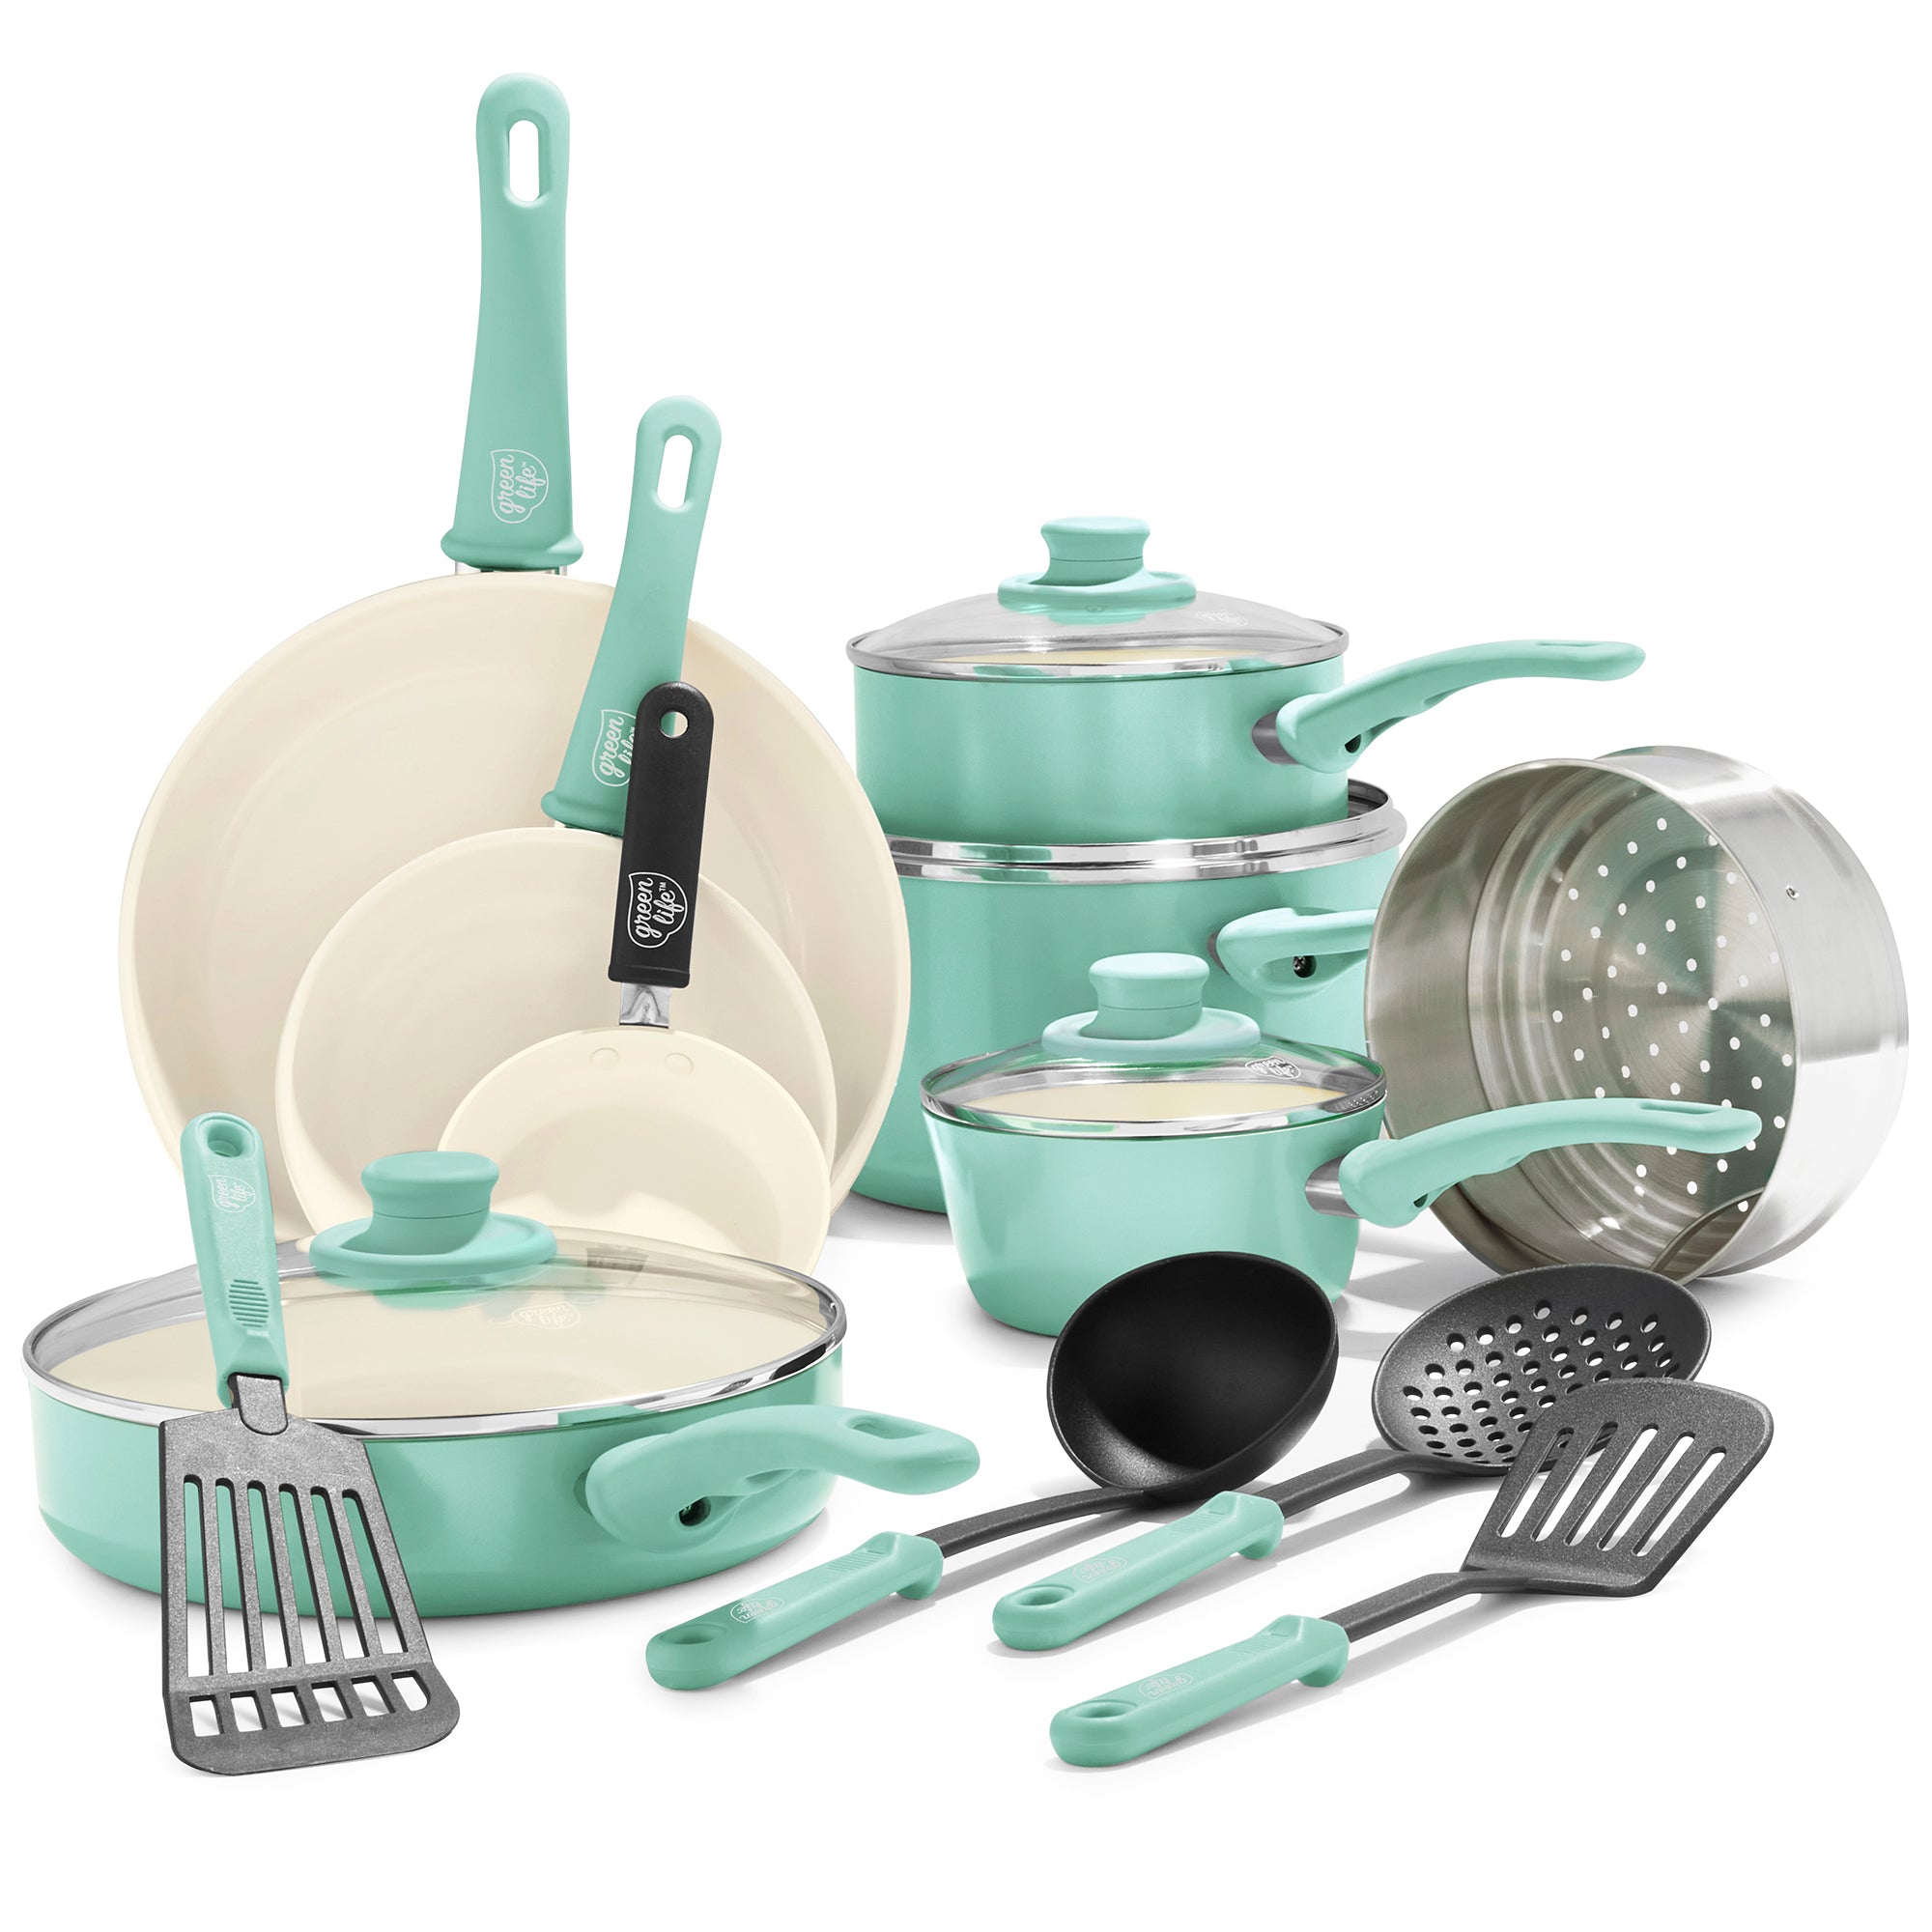 https://www.momjunction.com/wp-content/uploads/product-images/greenlife-soft-grip-cookware-pots-and-pans-set_afl337.jpg